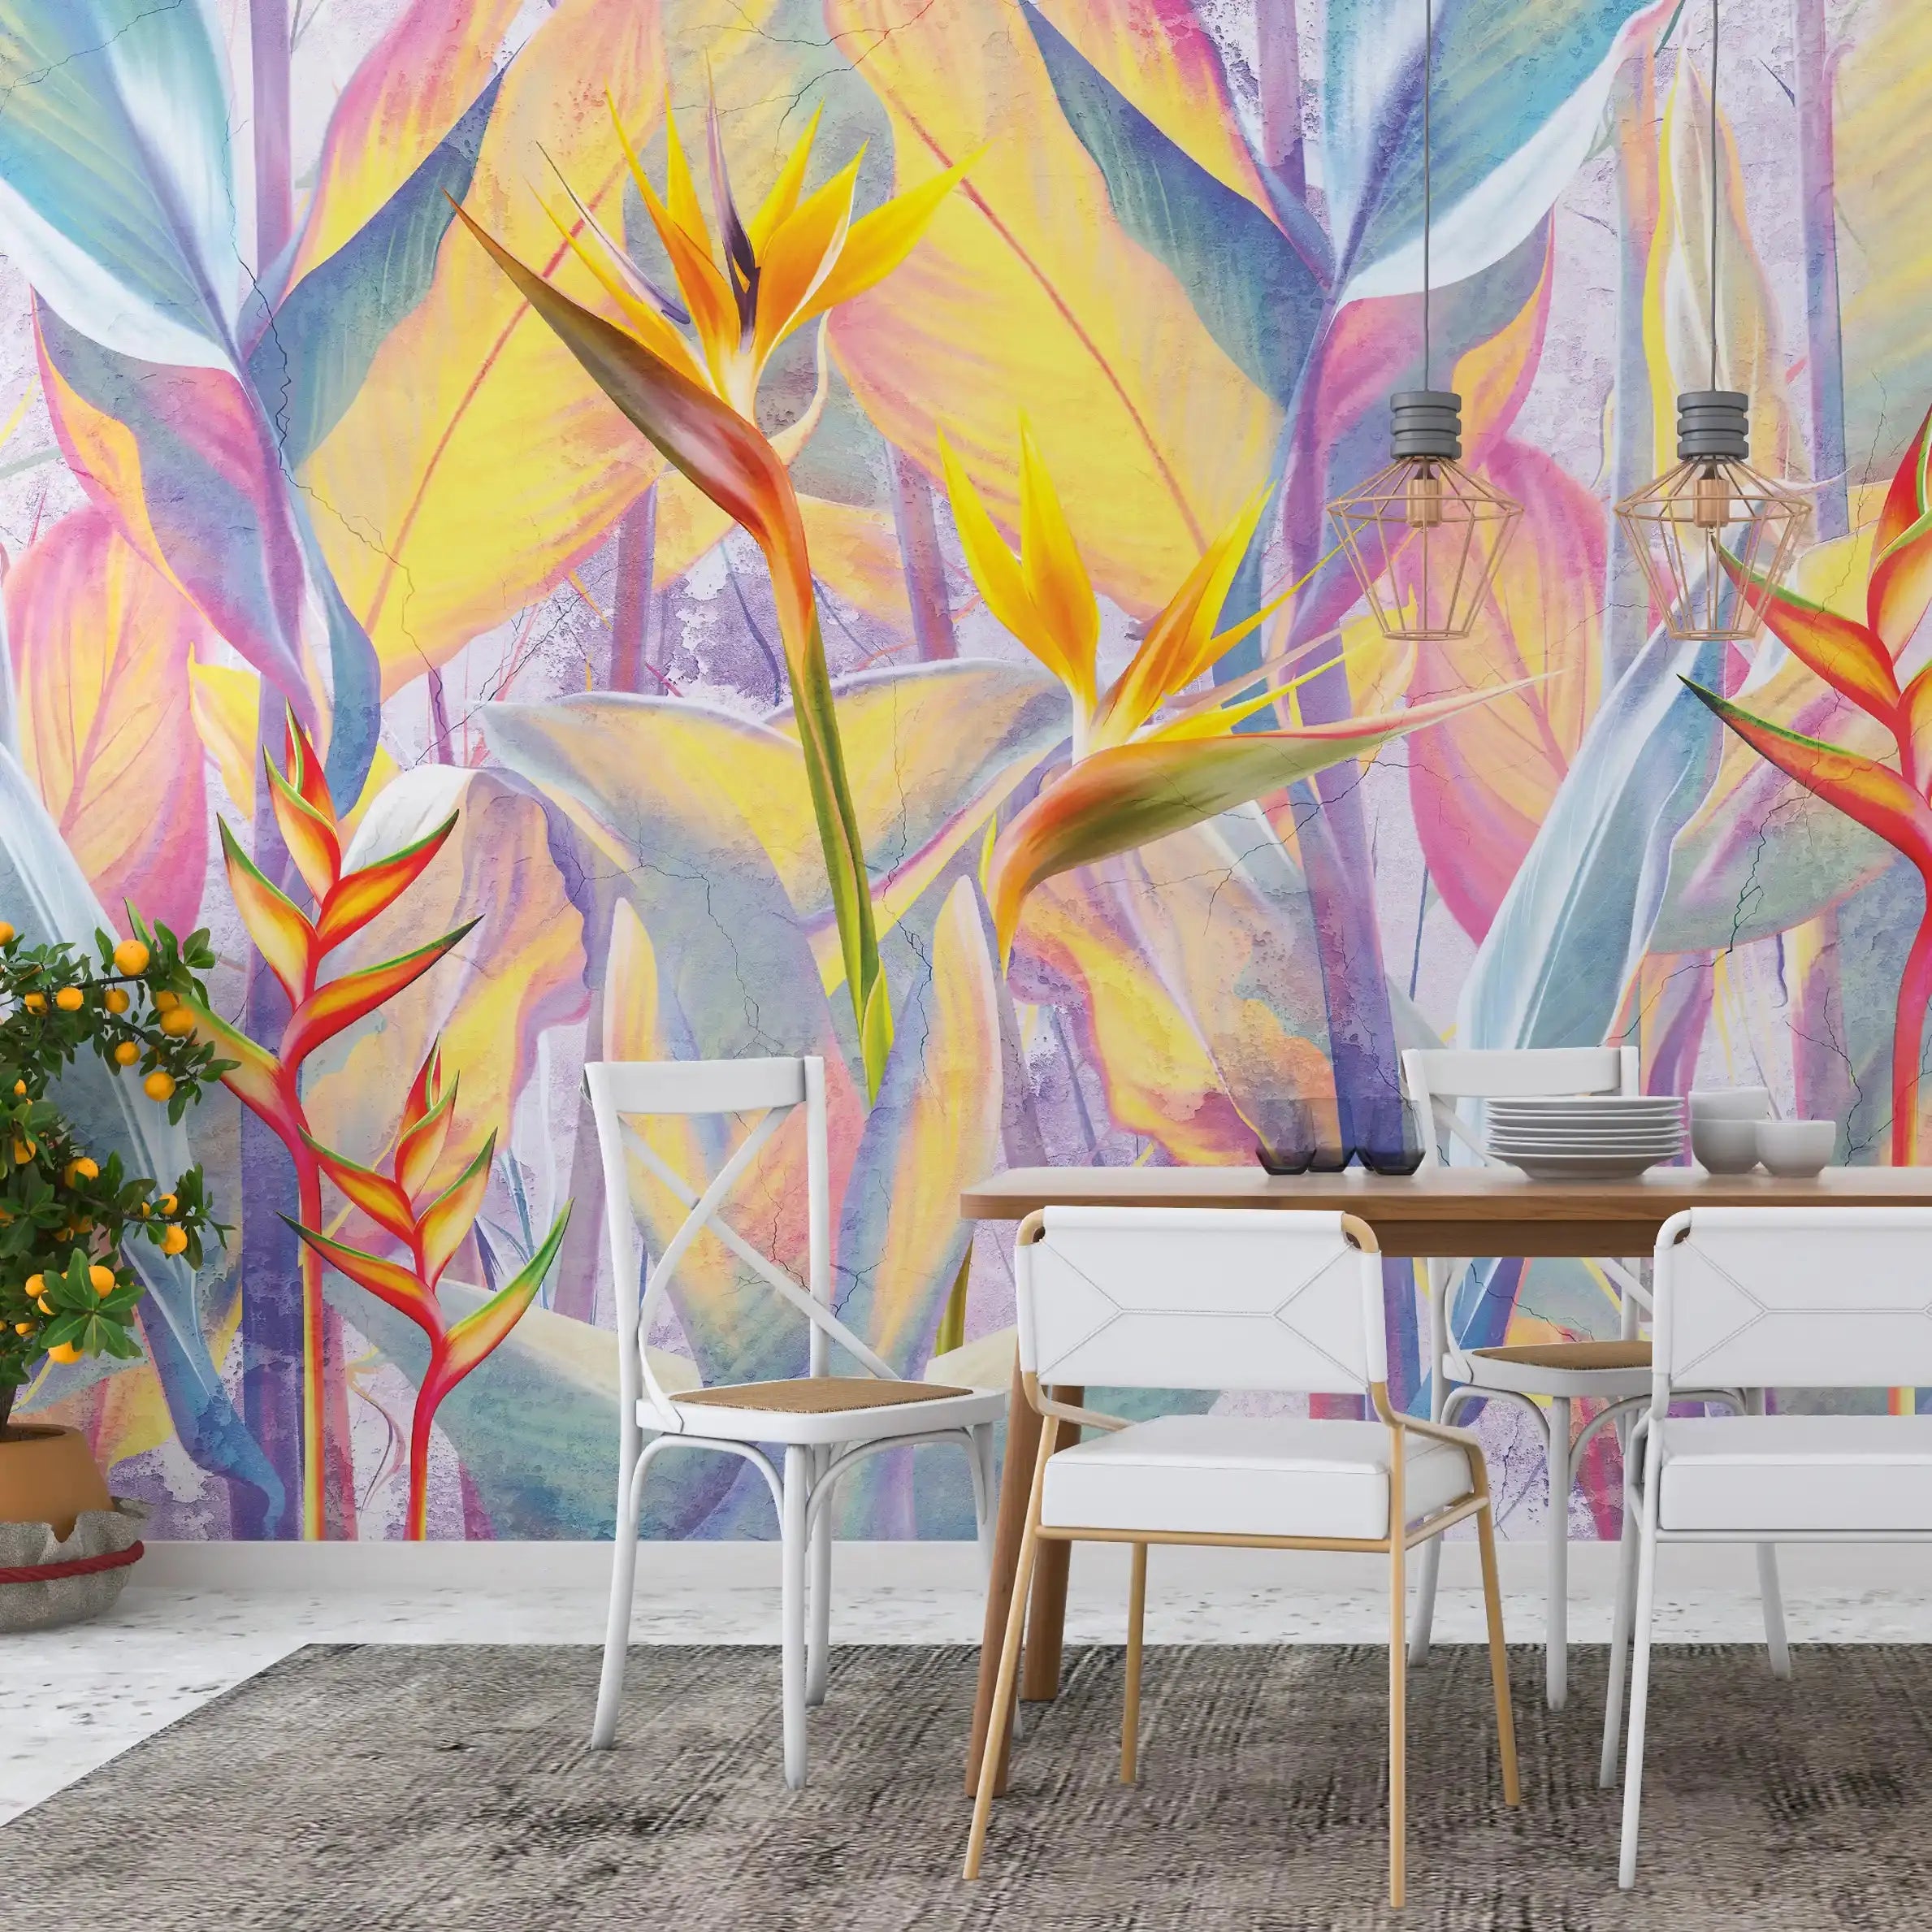 3006-A / Peel and Stick Botanical Wallpaper - Bird of Paradise Design, Easy Install Wall Mural - Artevella